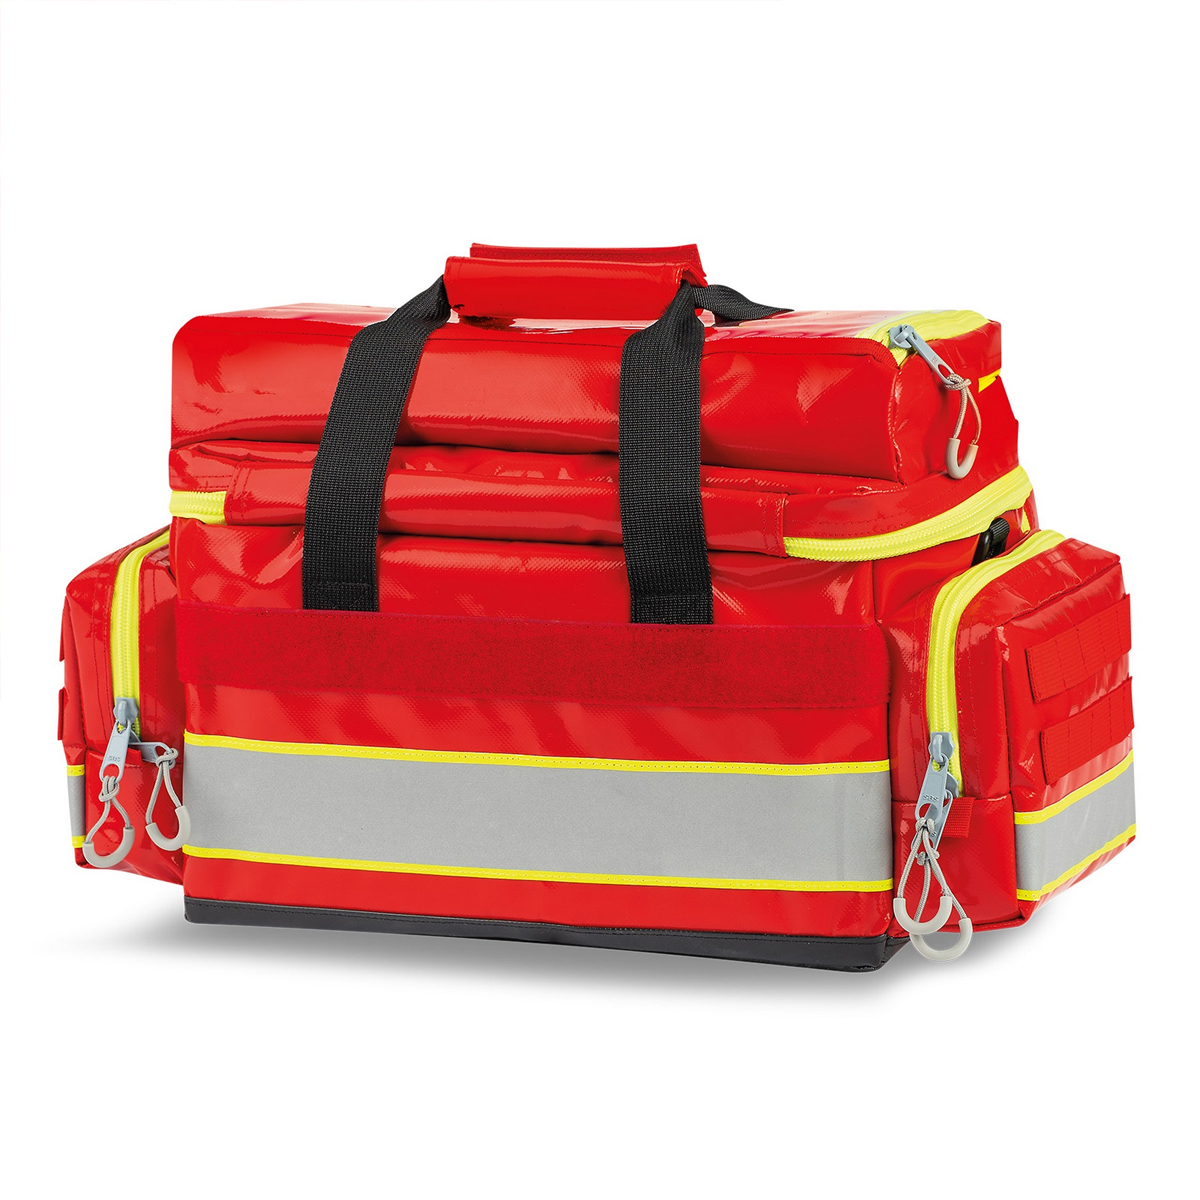 Lifebags Notfalltasche M - tagesleuchtgelb